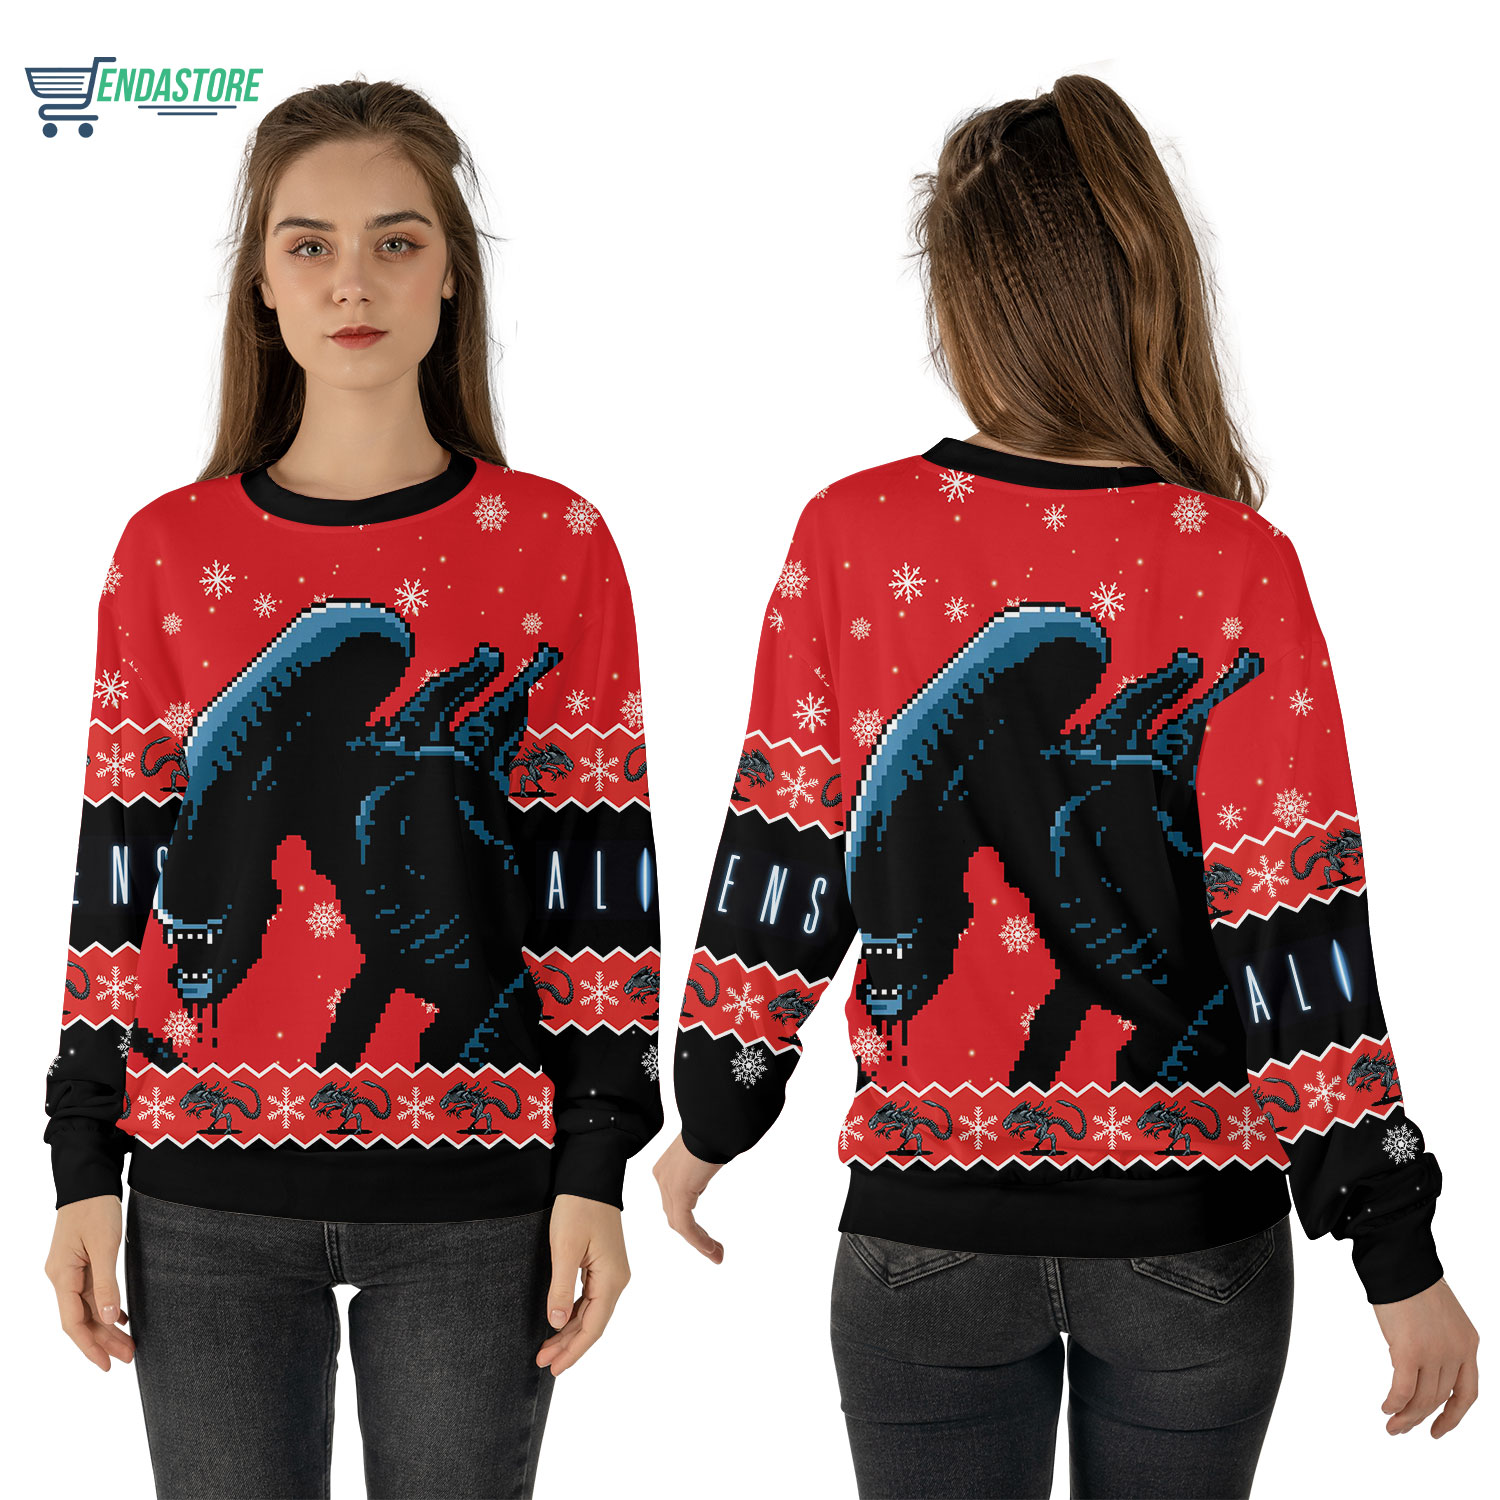 Alien Xenomorph Christmas sweater - Endastore.com